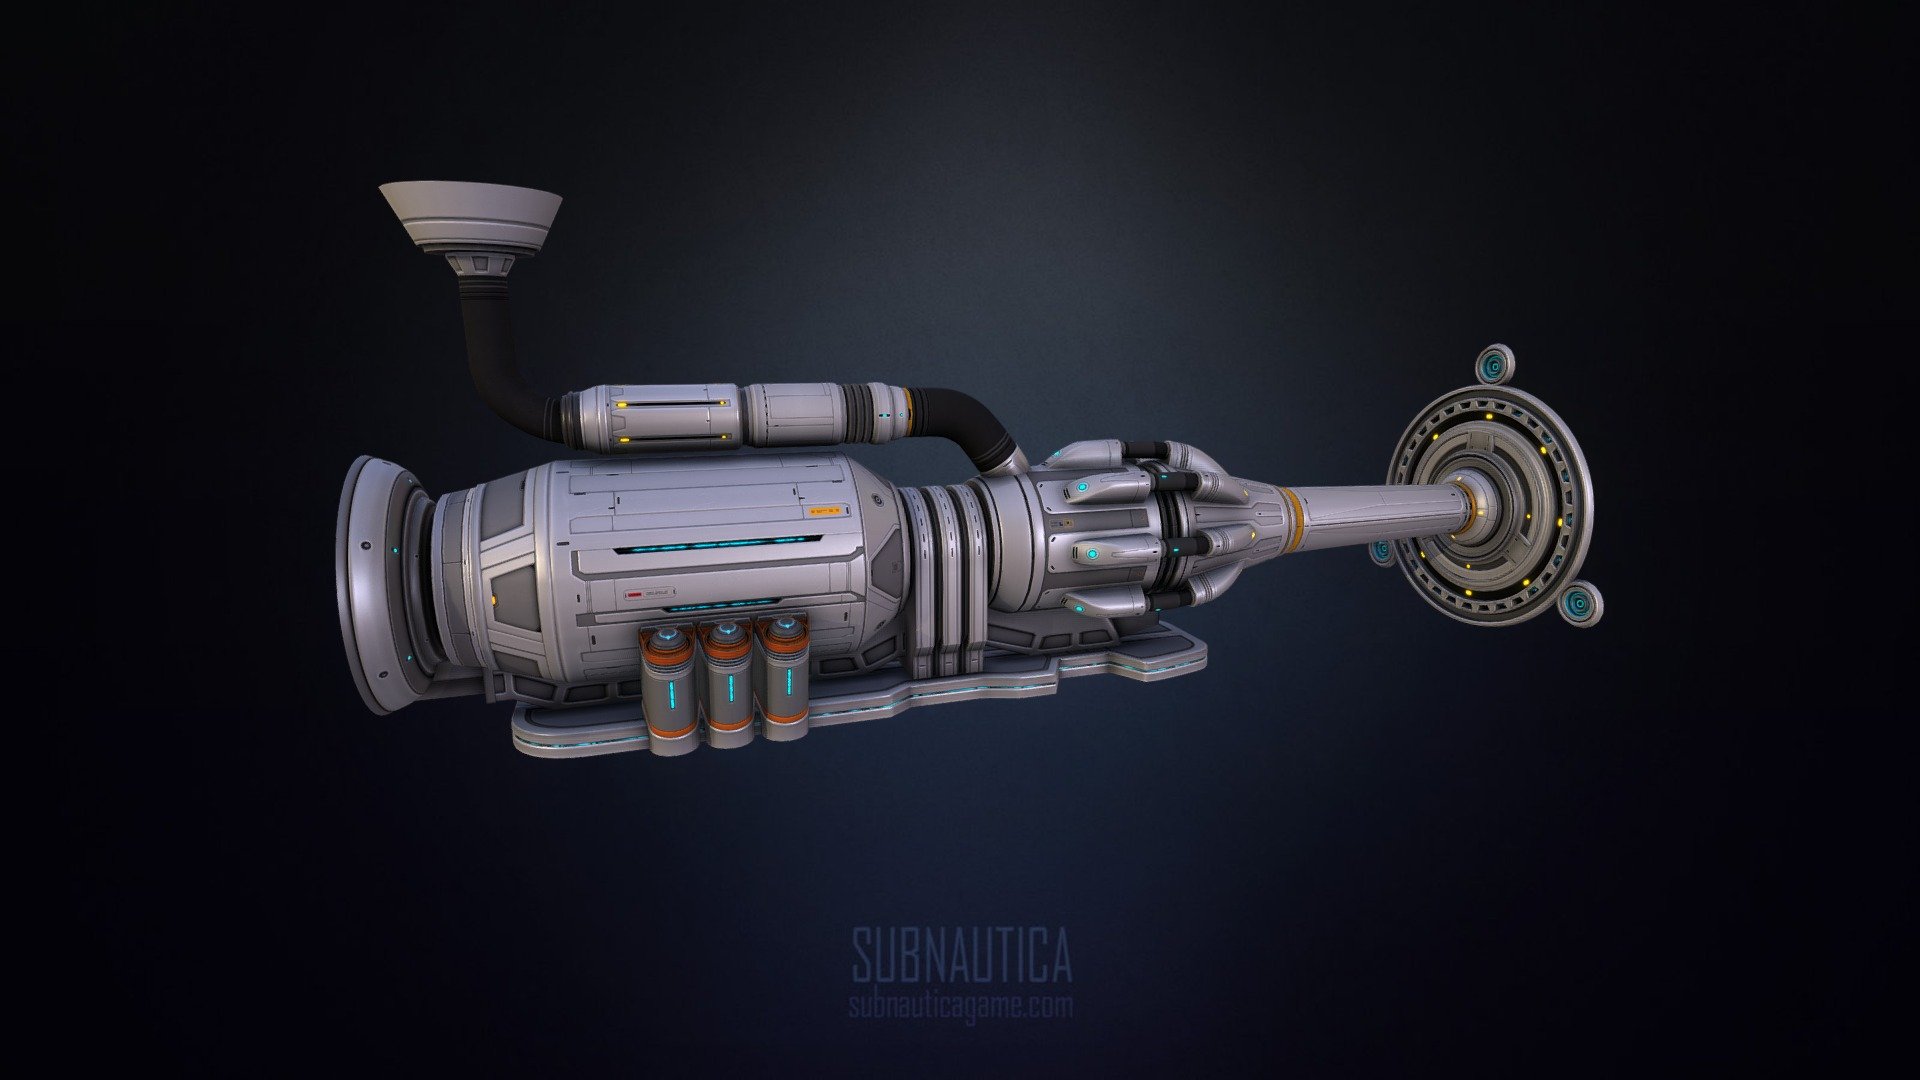 http://unknownworlds.com/subnautica/ - cyclops_engine - 3D model by Fox3D 3d model